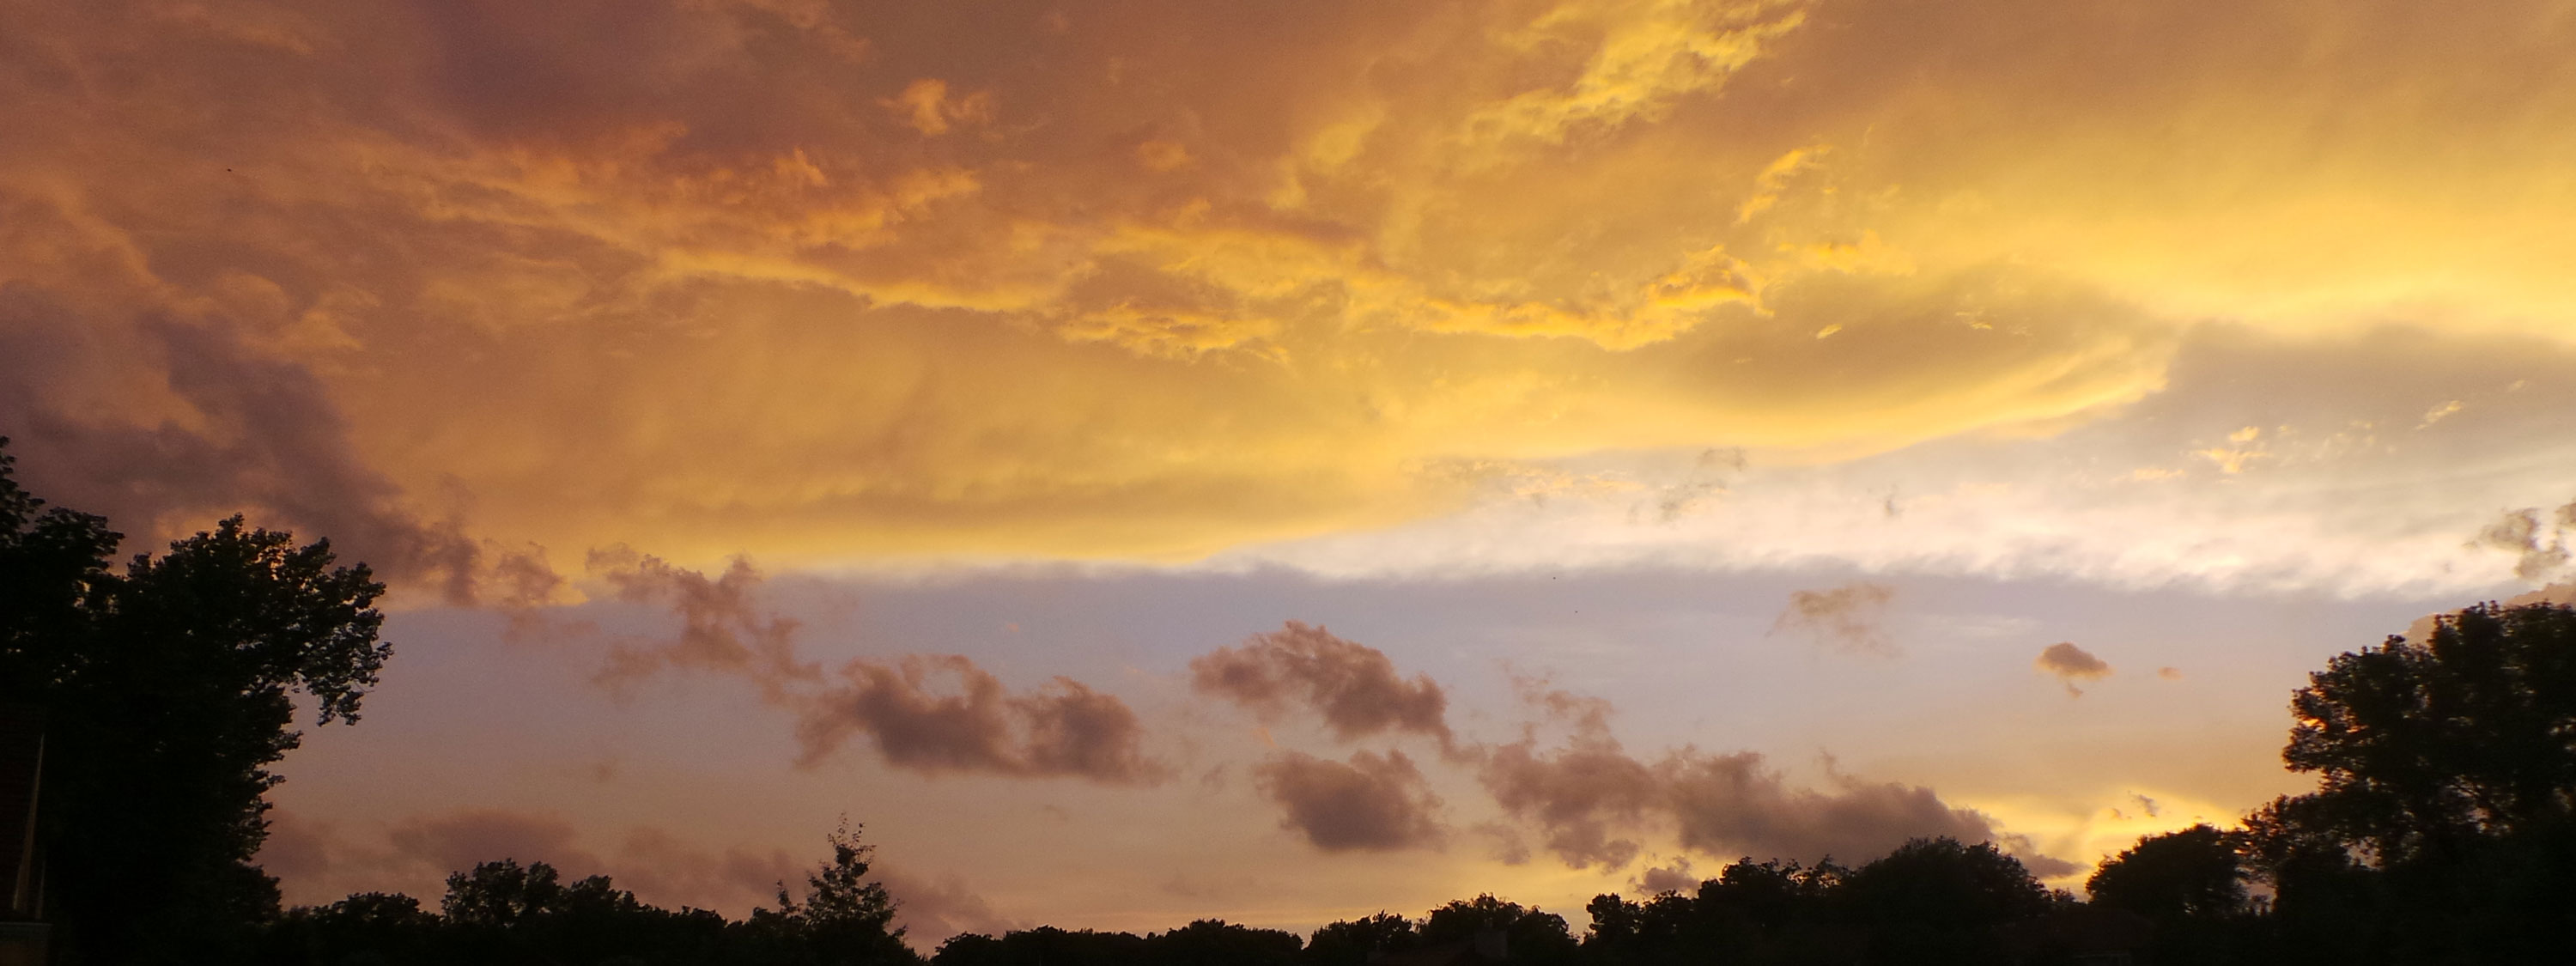 Sunset In Missouri June 2014